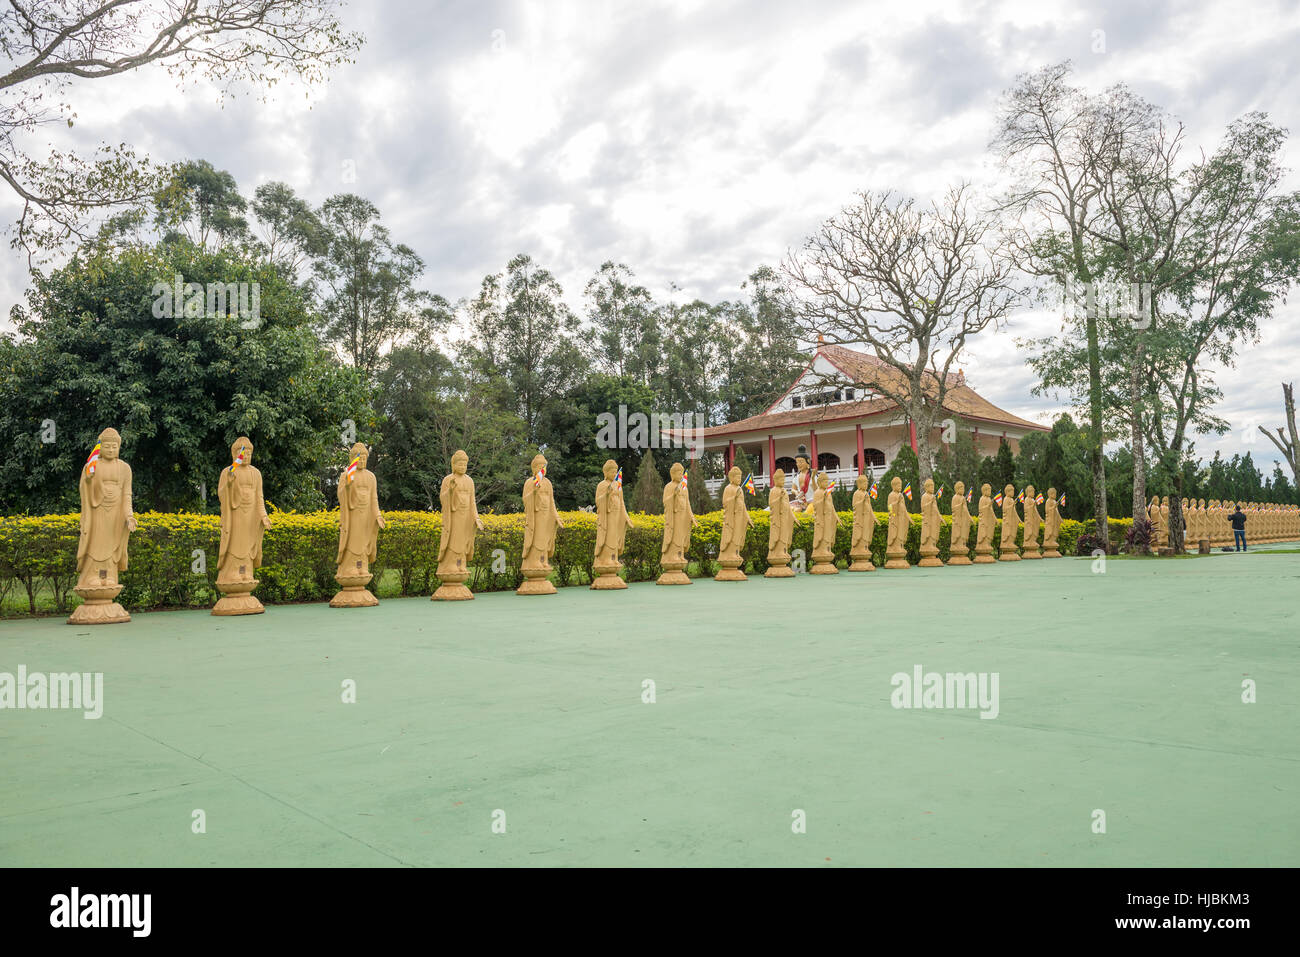 Foz do Iguazu, Brasile - 8 luglio 2016: diverse statue di Buddha in prospettiva al tempio buddista in Foz do Iguazu, Brasile. Foto Stock